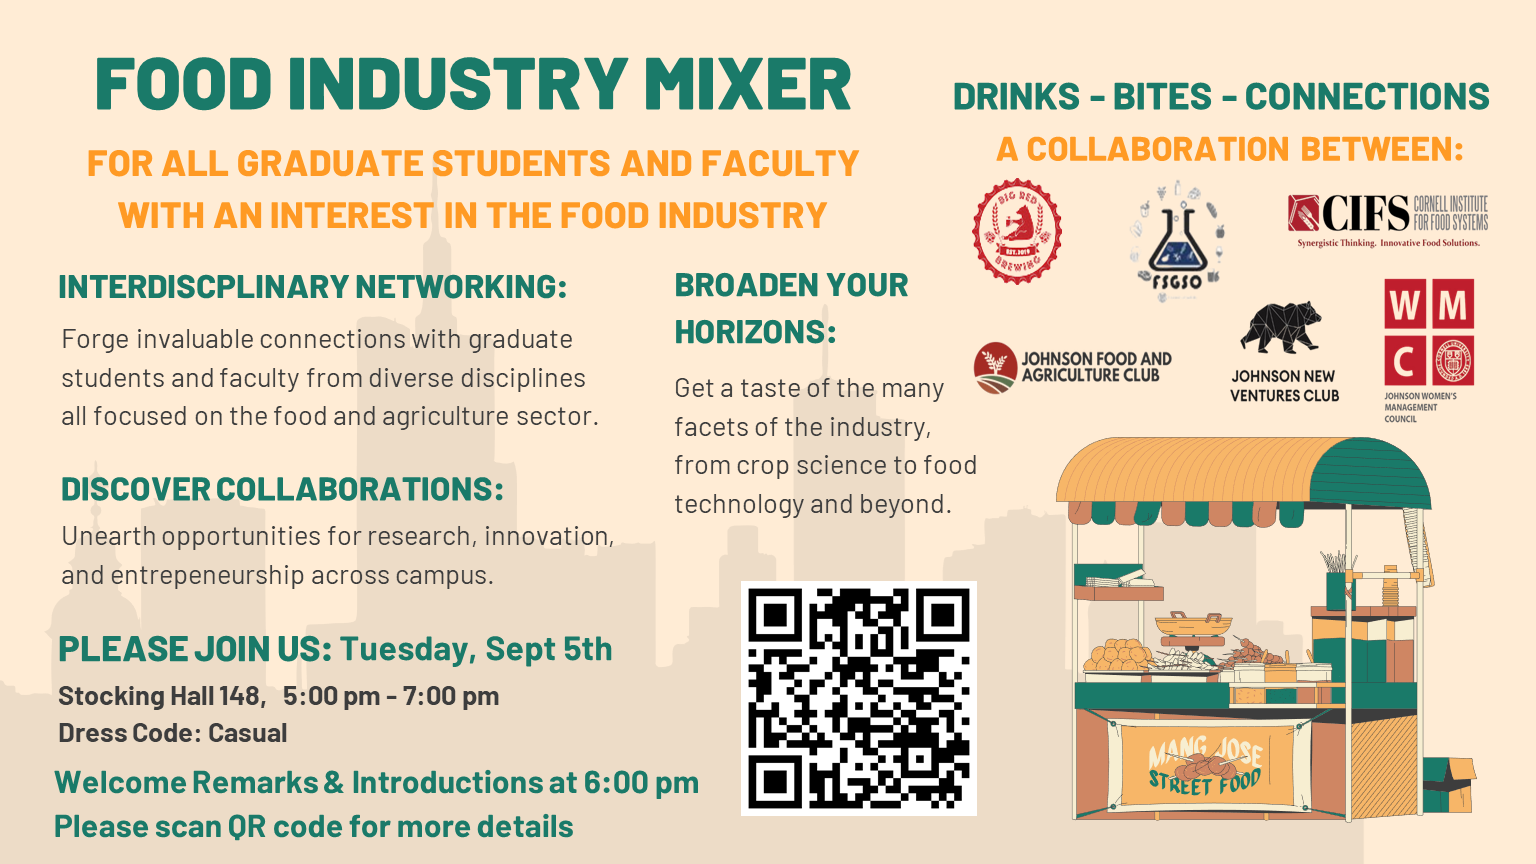 Food Industry Mixer September 5, 5-7 p.m.